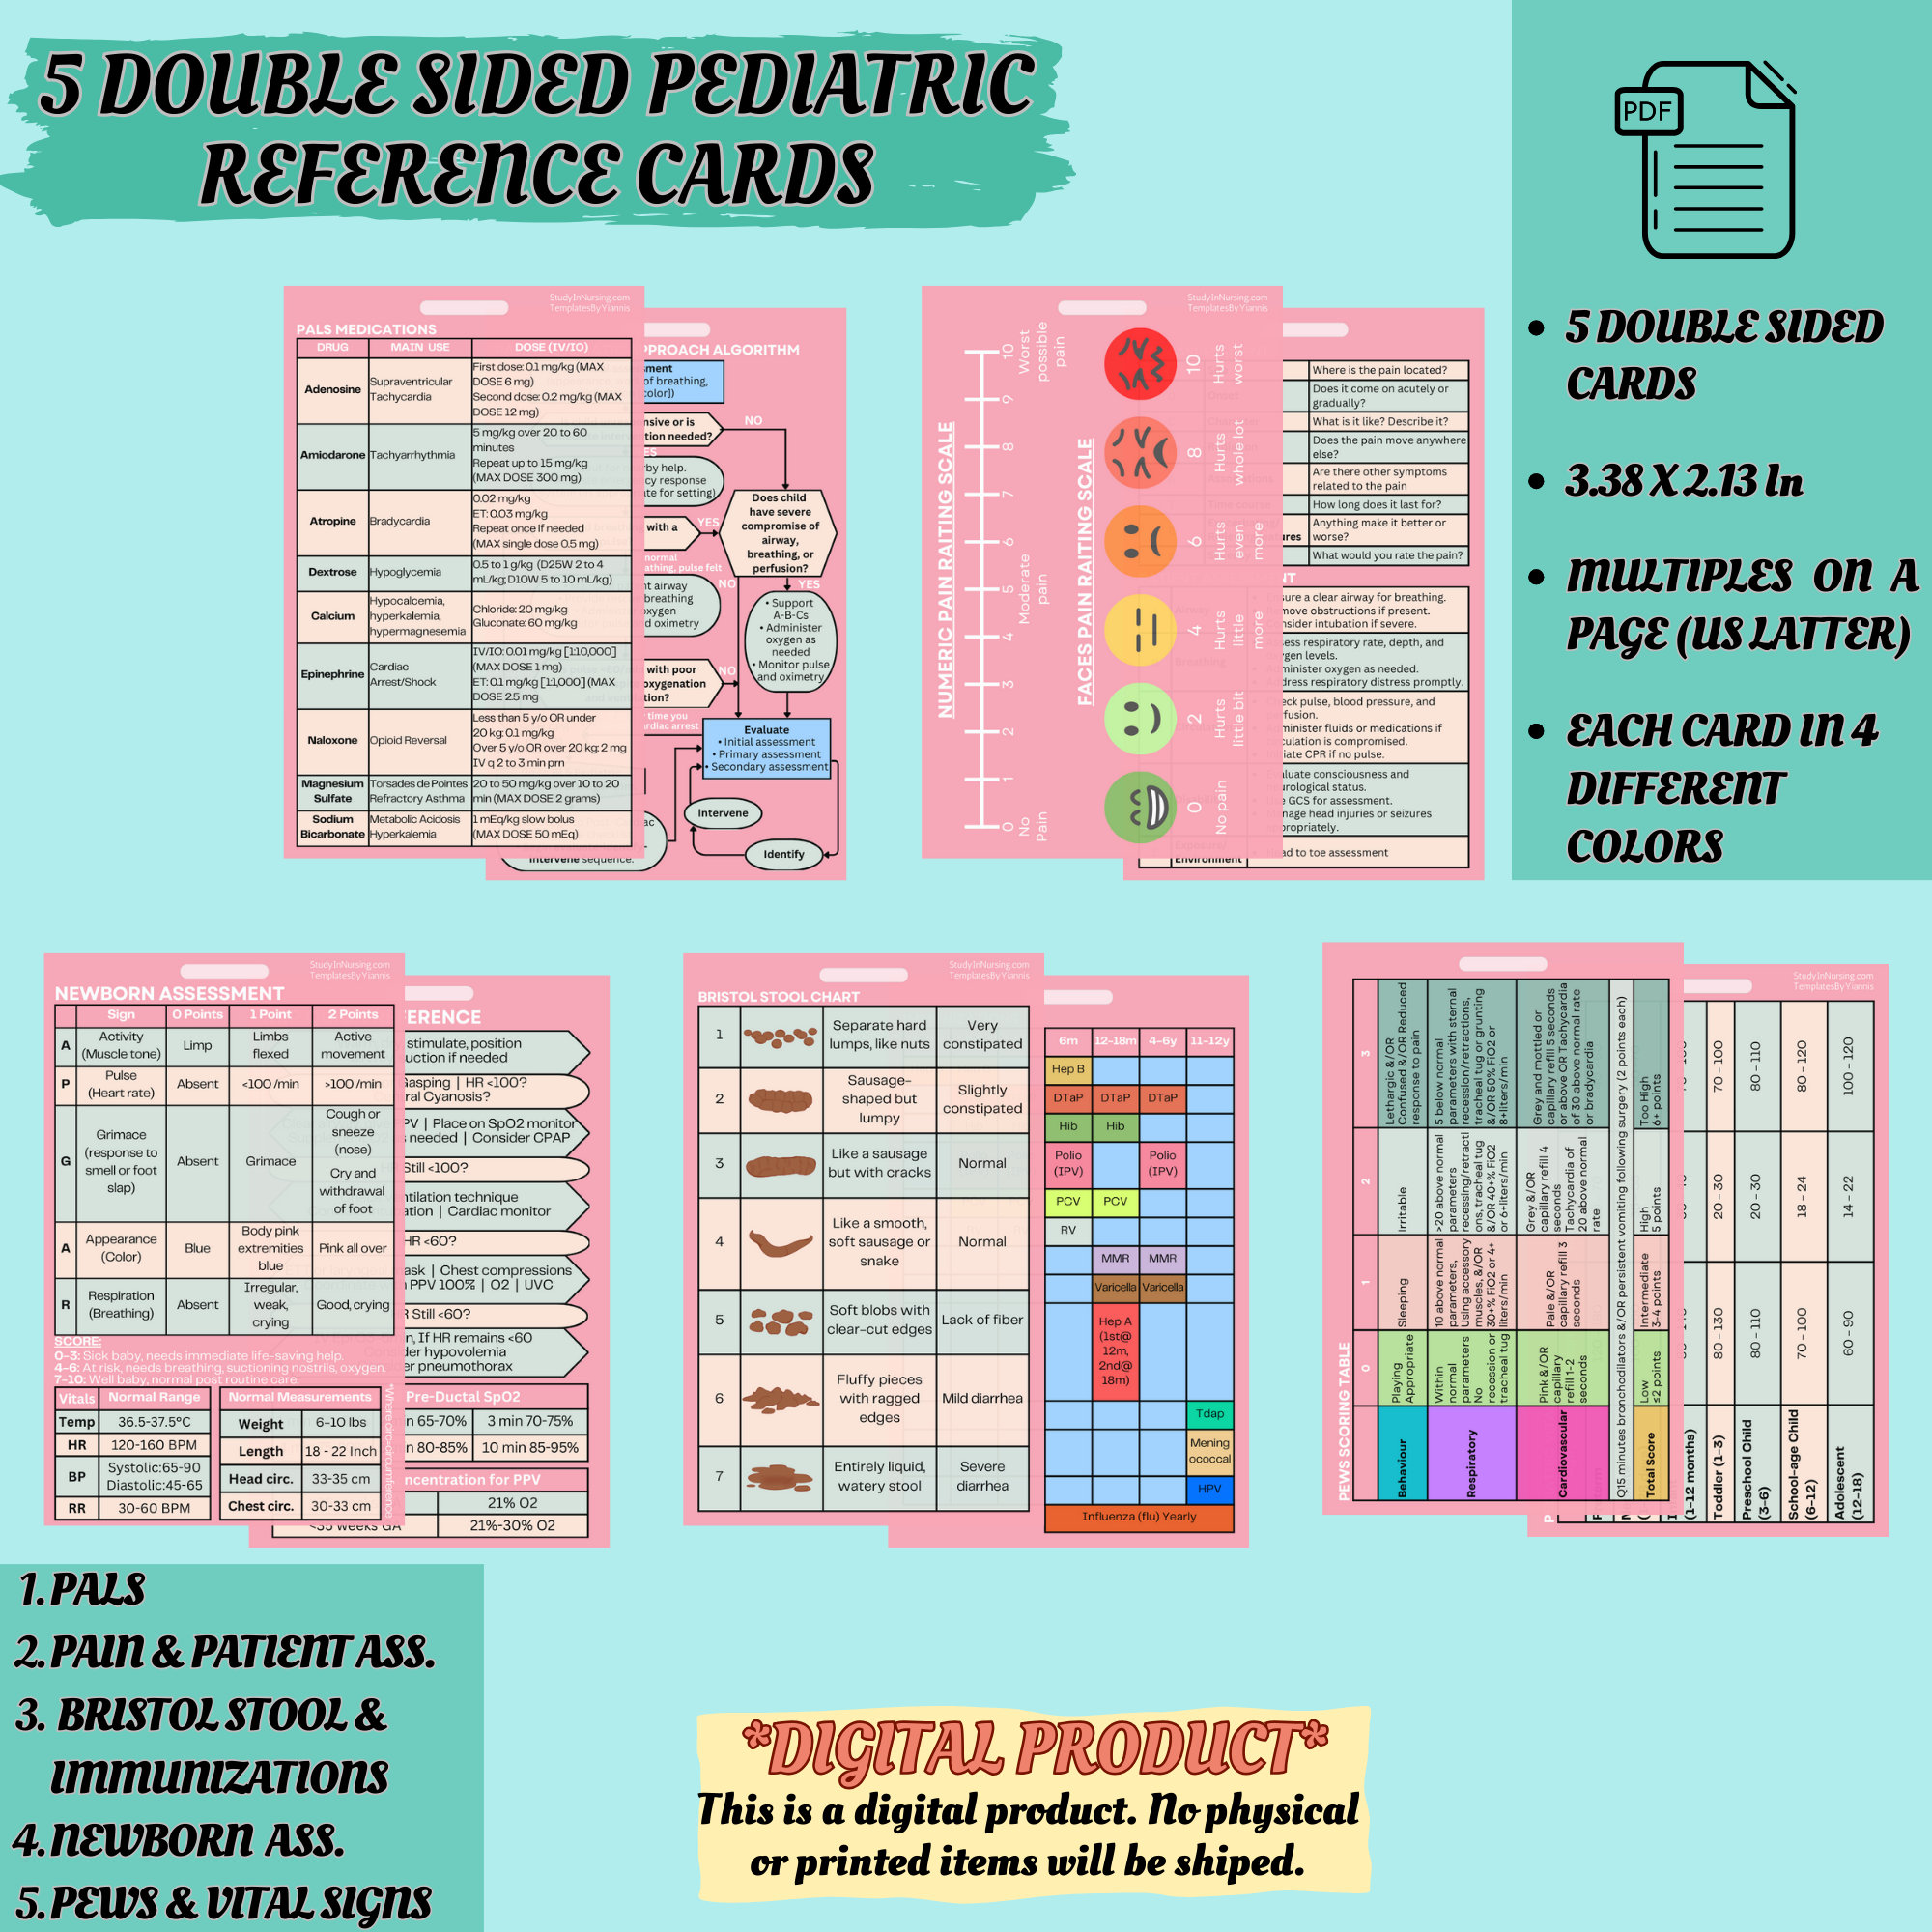 PedsVitals — Pediatric Vitals and Developmental Milestones Reference Card